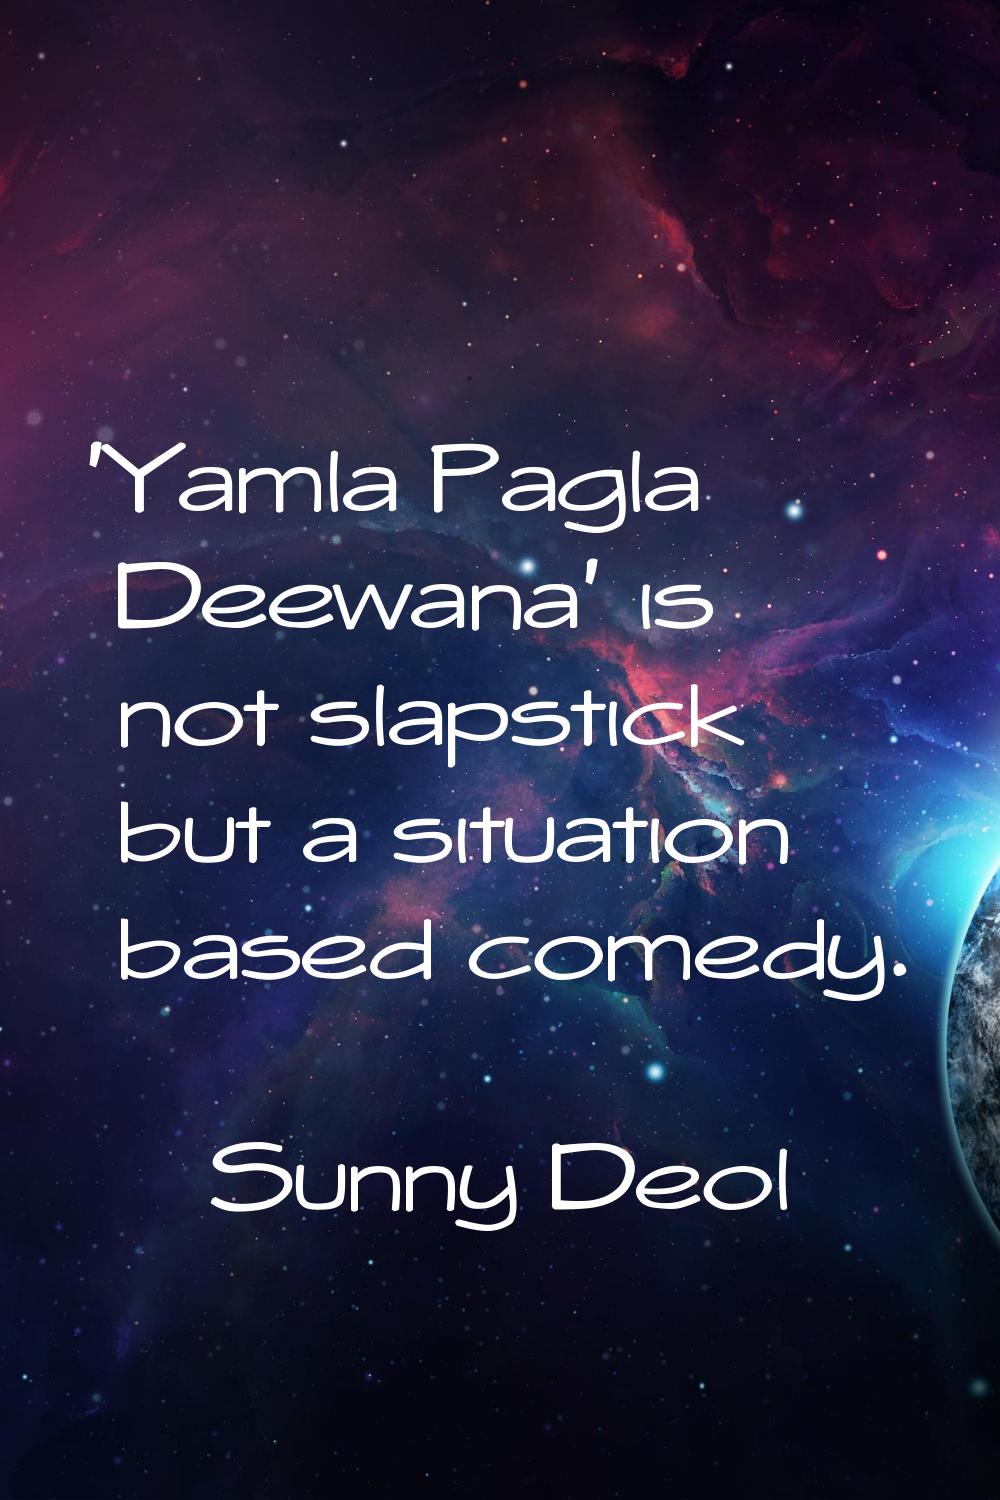 'Yamla Pagla Deewana' is not slapstick but a situation based comedy.